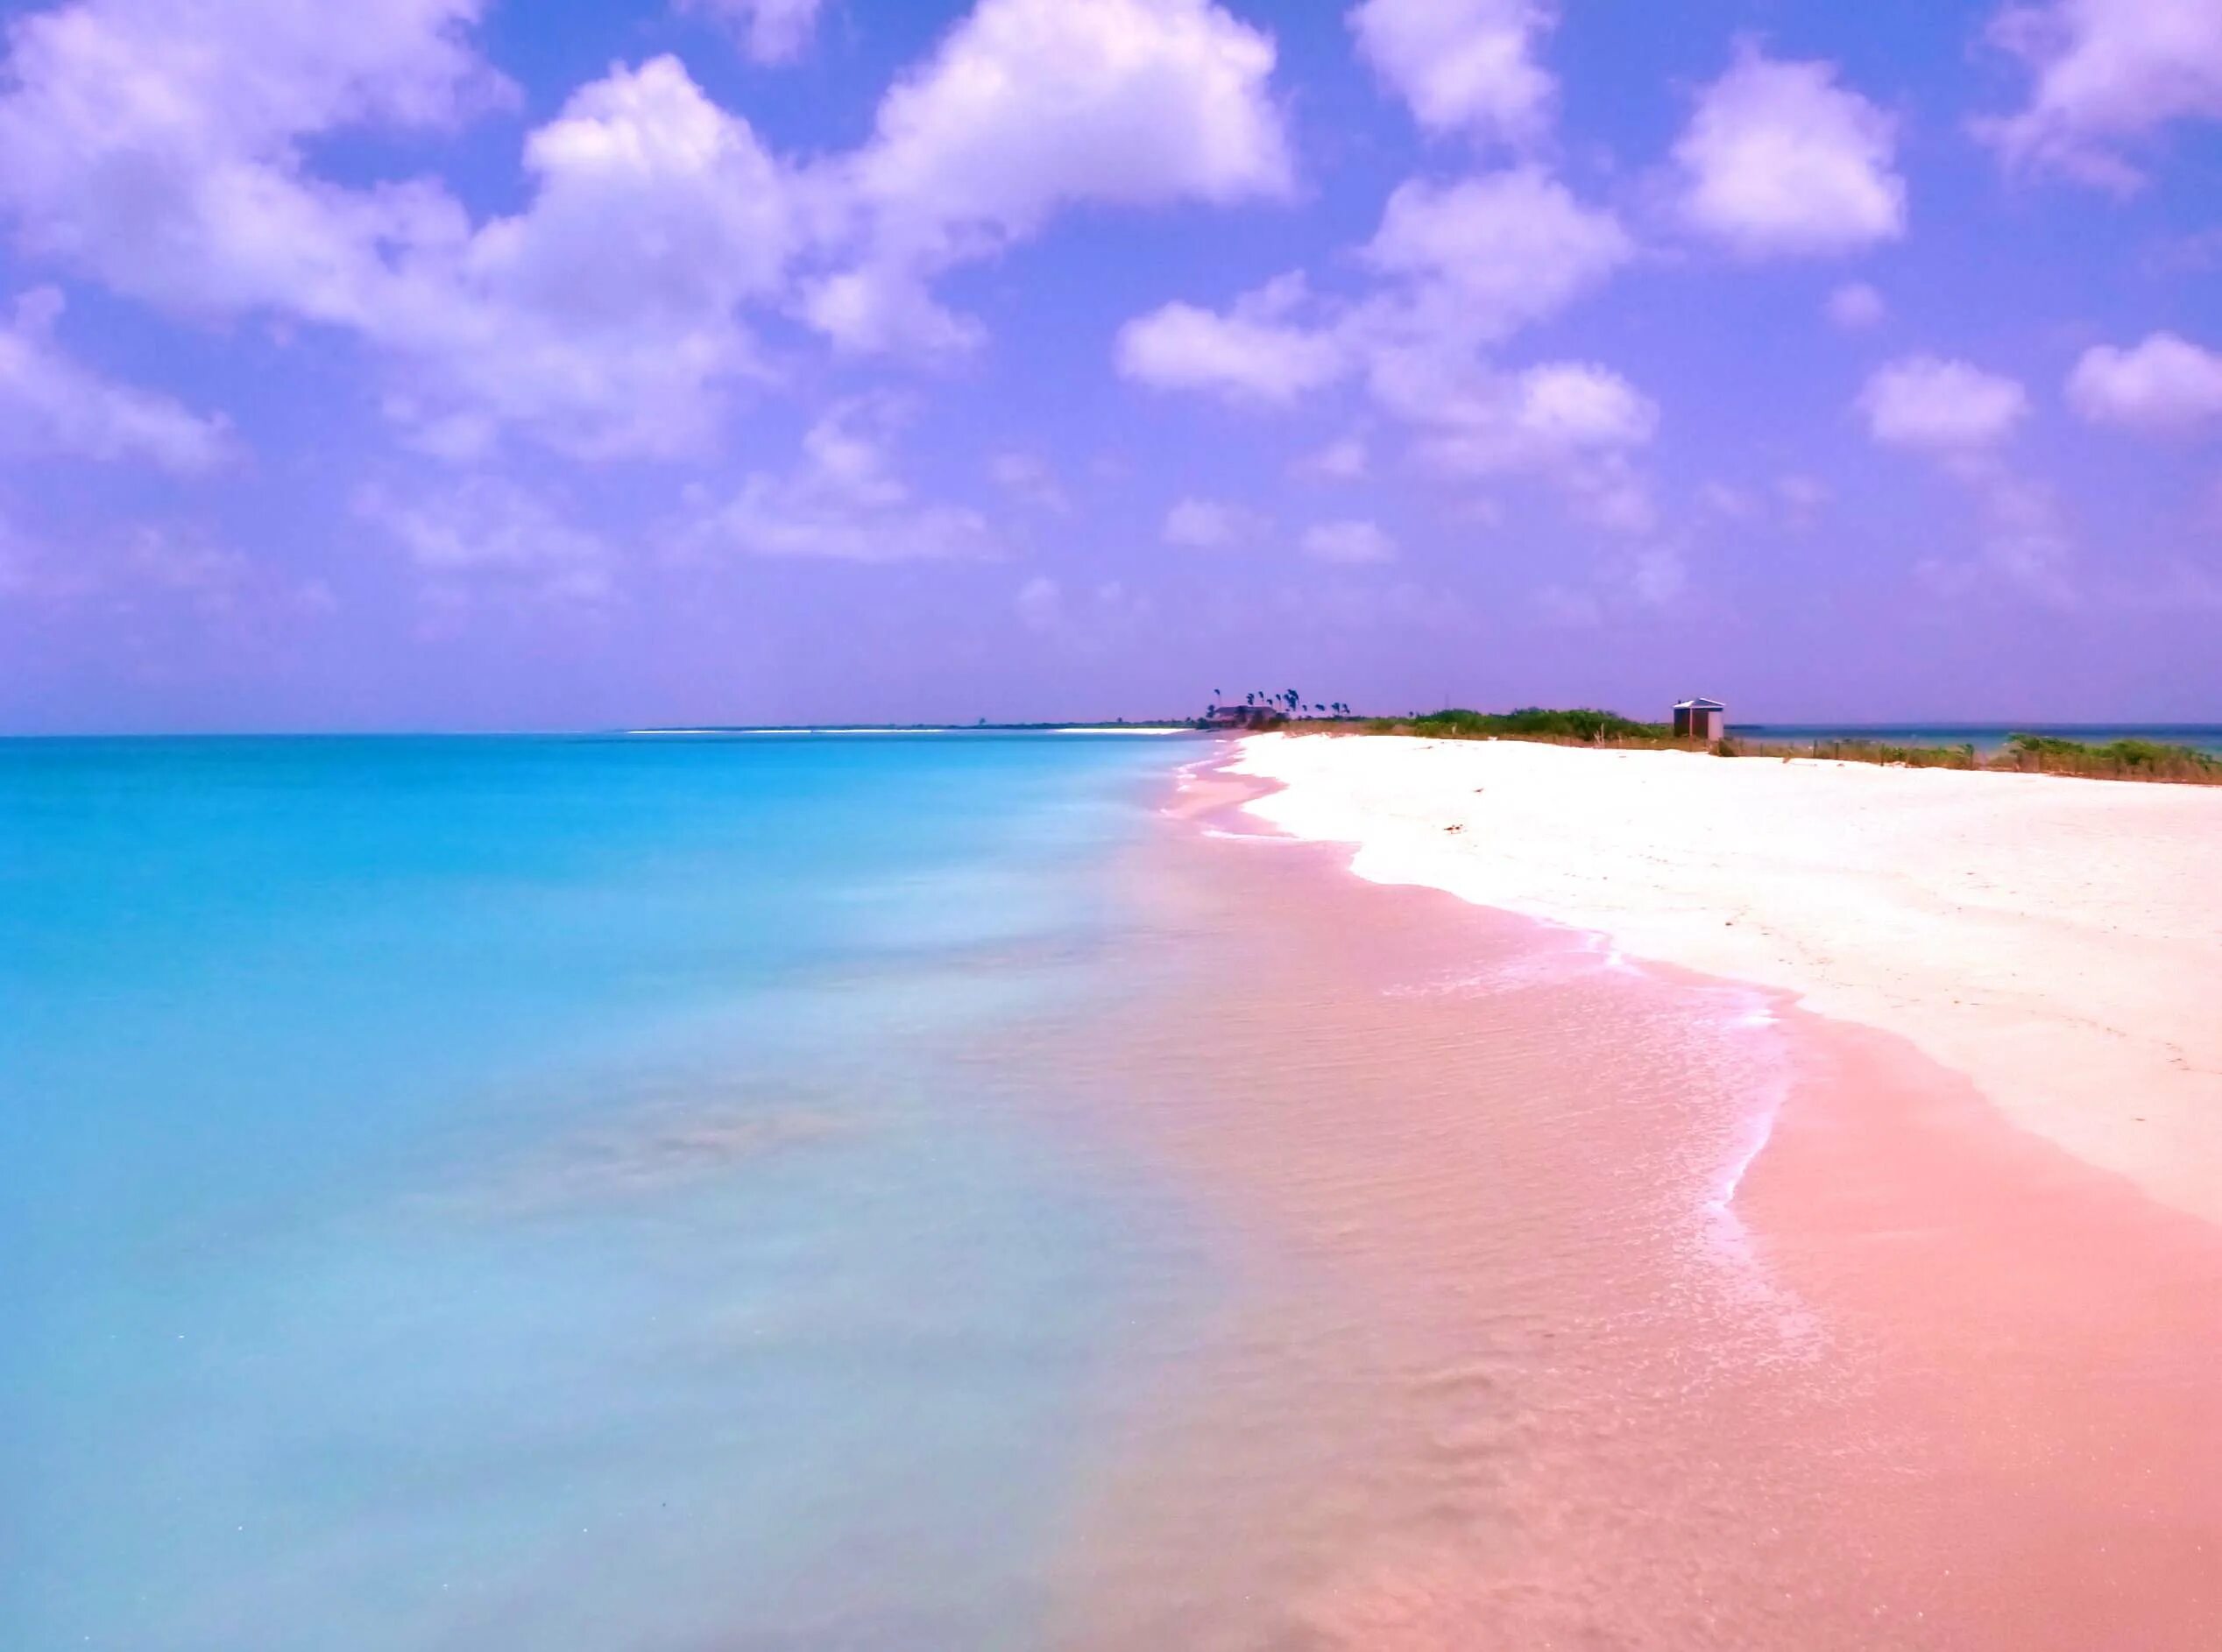 Harbor island. Пляж Пинк Сэндс Бич Багамские острова. Розовый пляж Пинк Сэнд Бич, Багамские острова. Харбор Багамы розовый пляж. Остров Харбор Багамские.